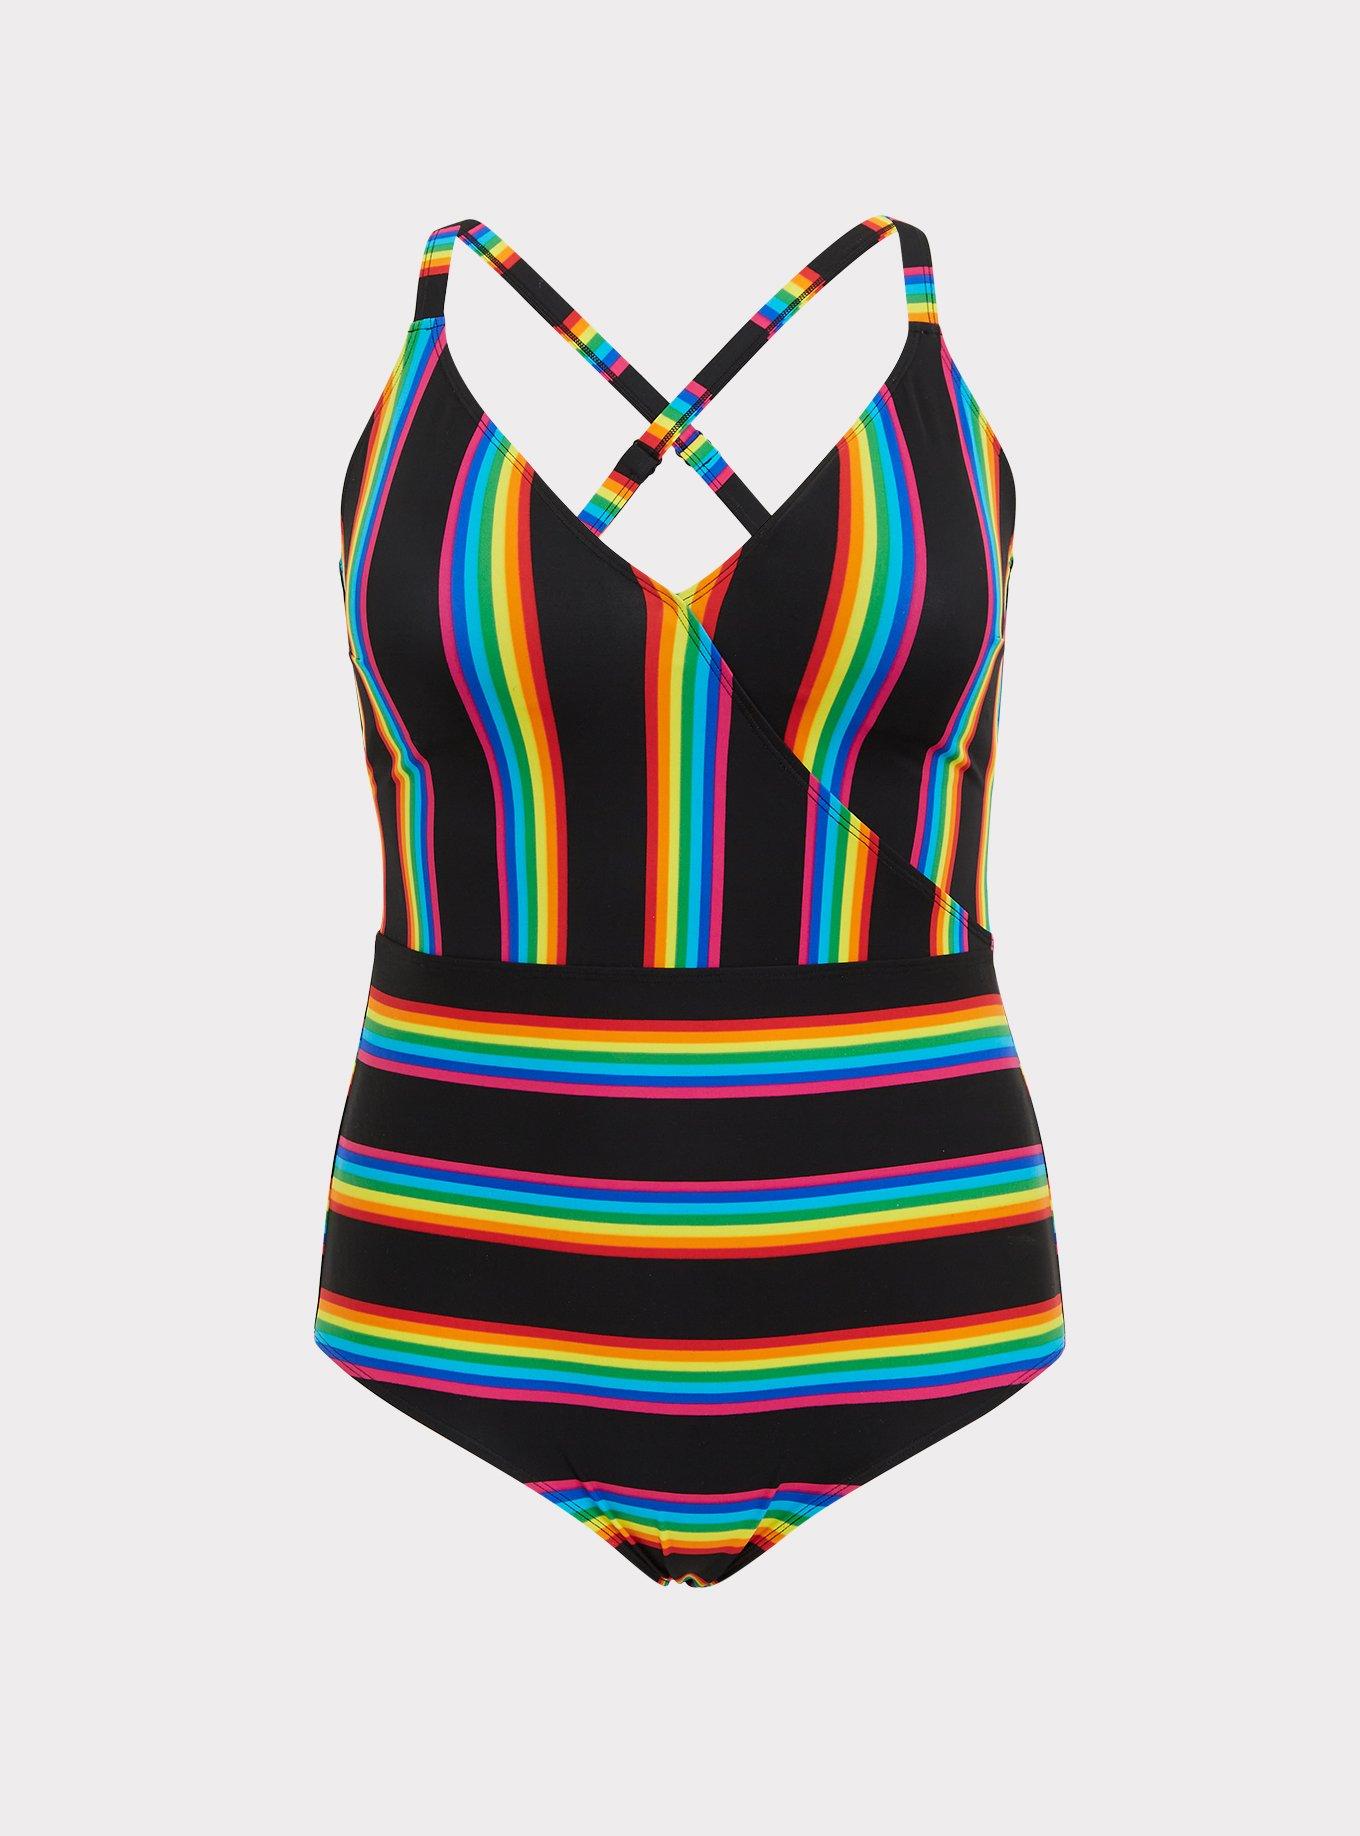 Torrid active wireless racerback bikini top rainbow striped 2xl/ 18-20 NWOT